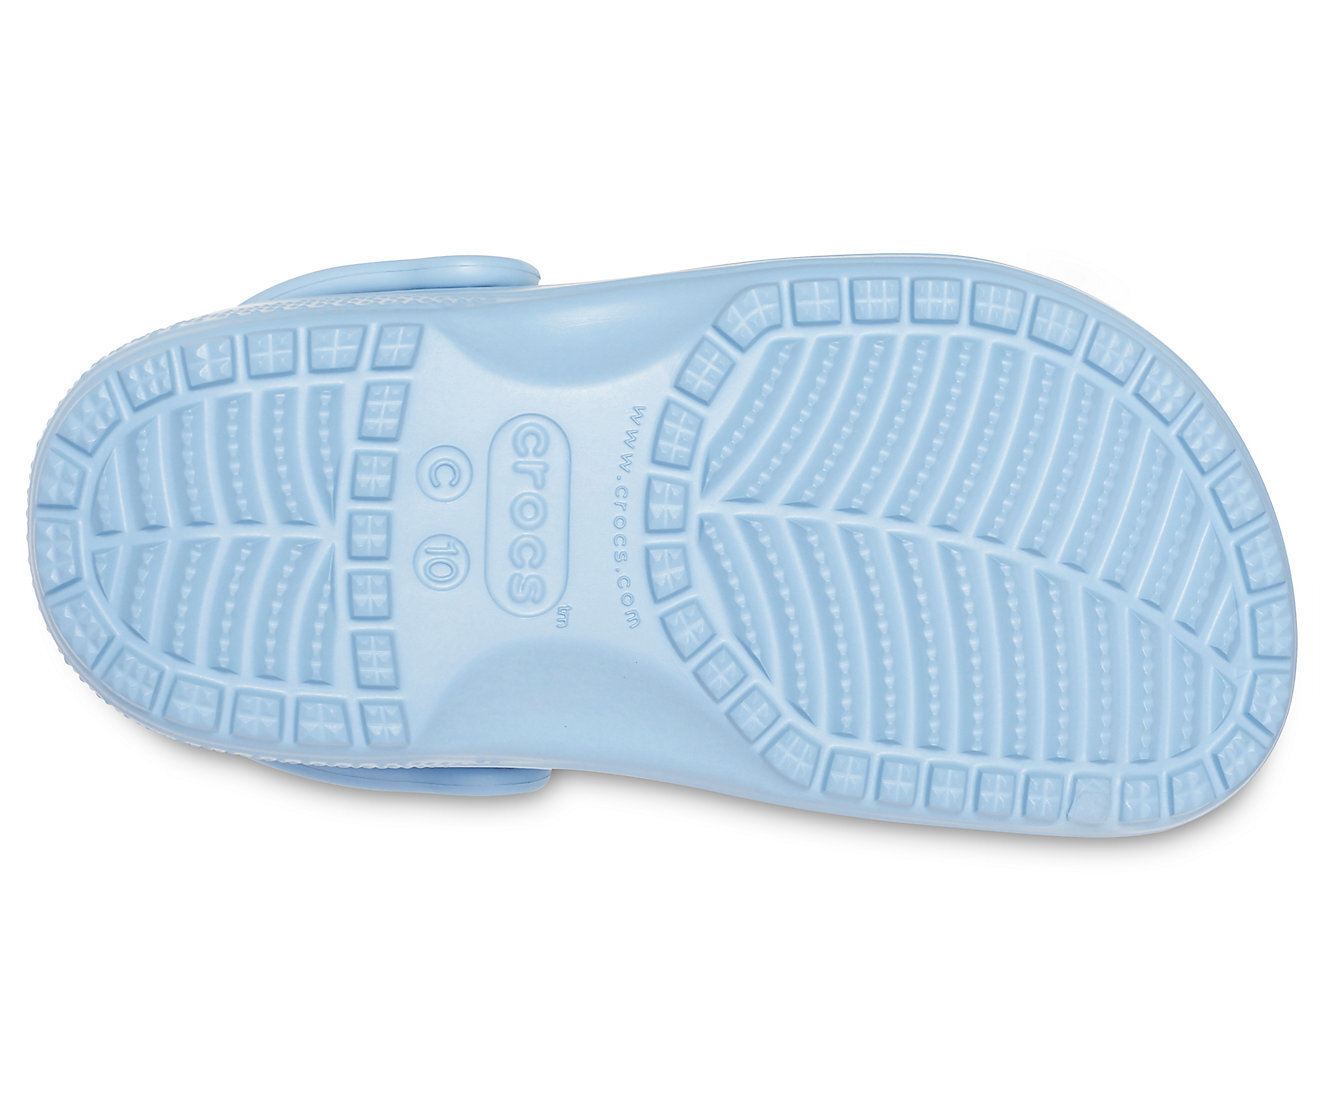 Crocs Kids Classic Clog Shoes Sandals - Chambray Blue